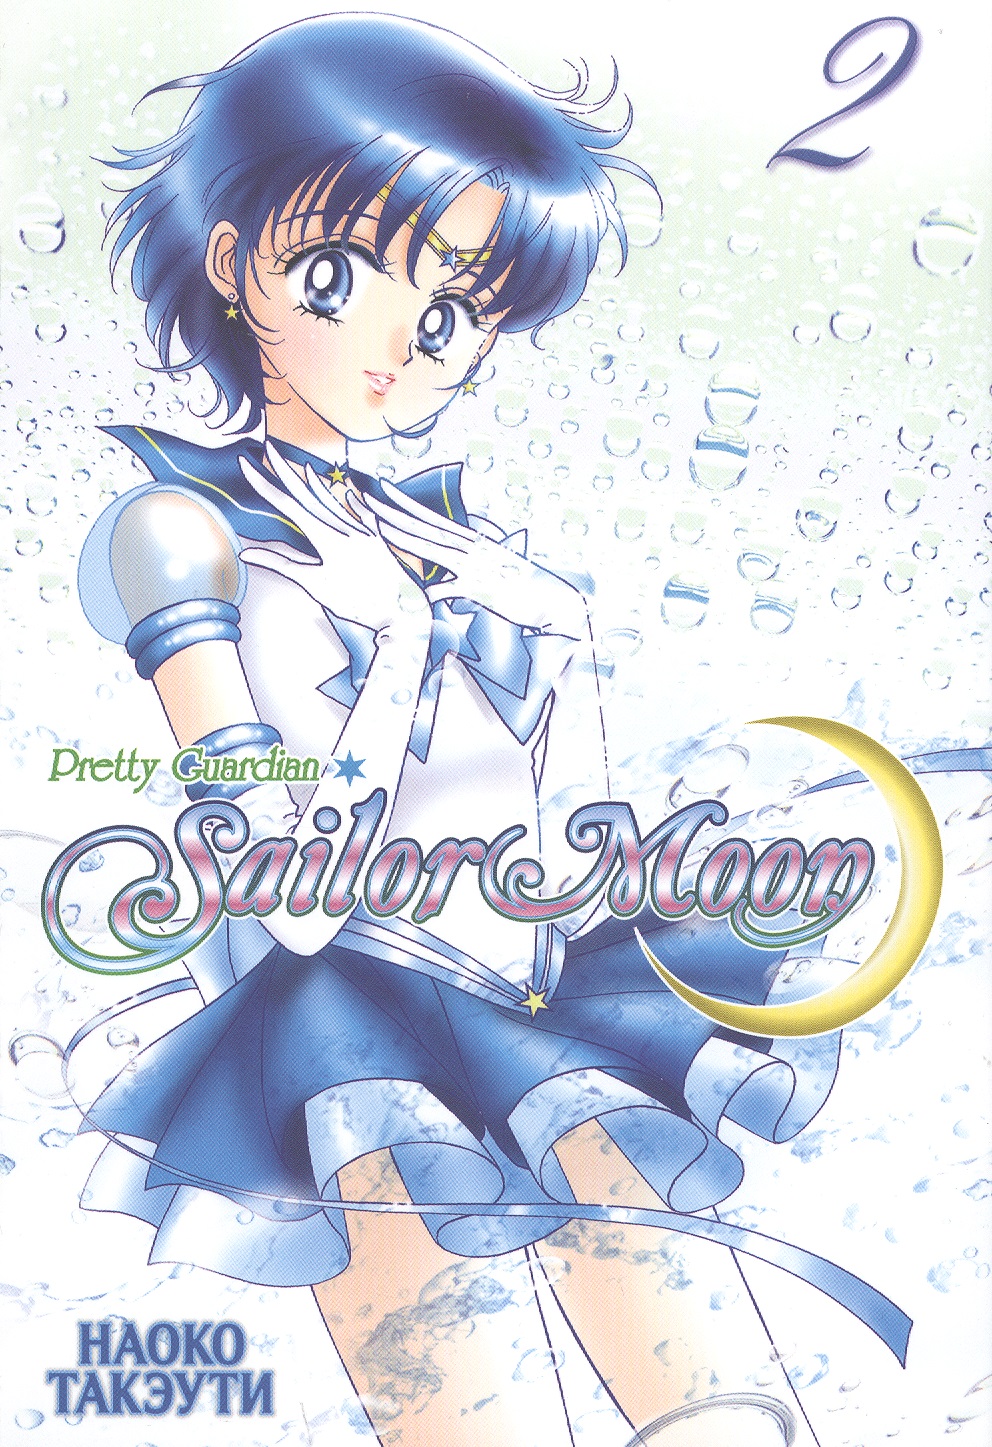 Такэути Наоко Sailor Moon. Pretty Guardian. Том 2 фигурка figuarts mini pretty guardian sailor moon – princess serenity 9 см